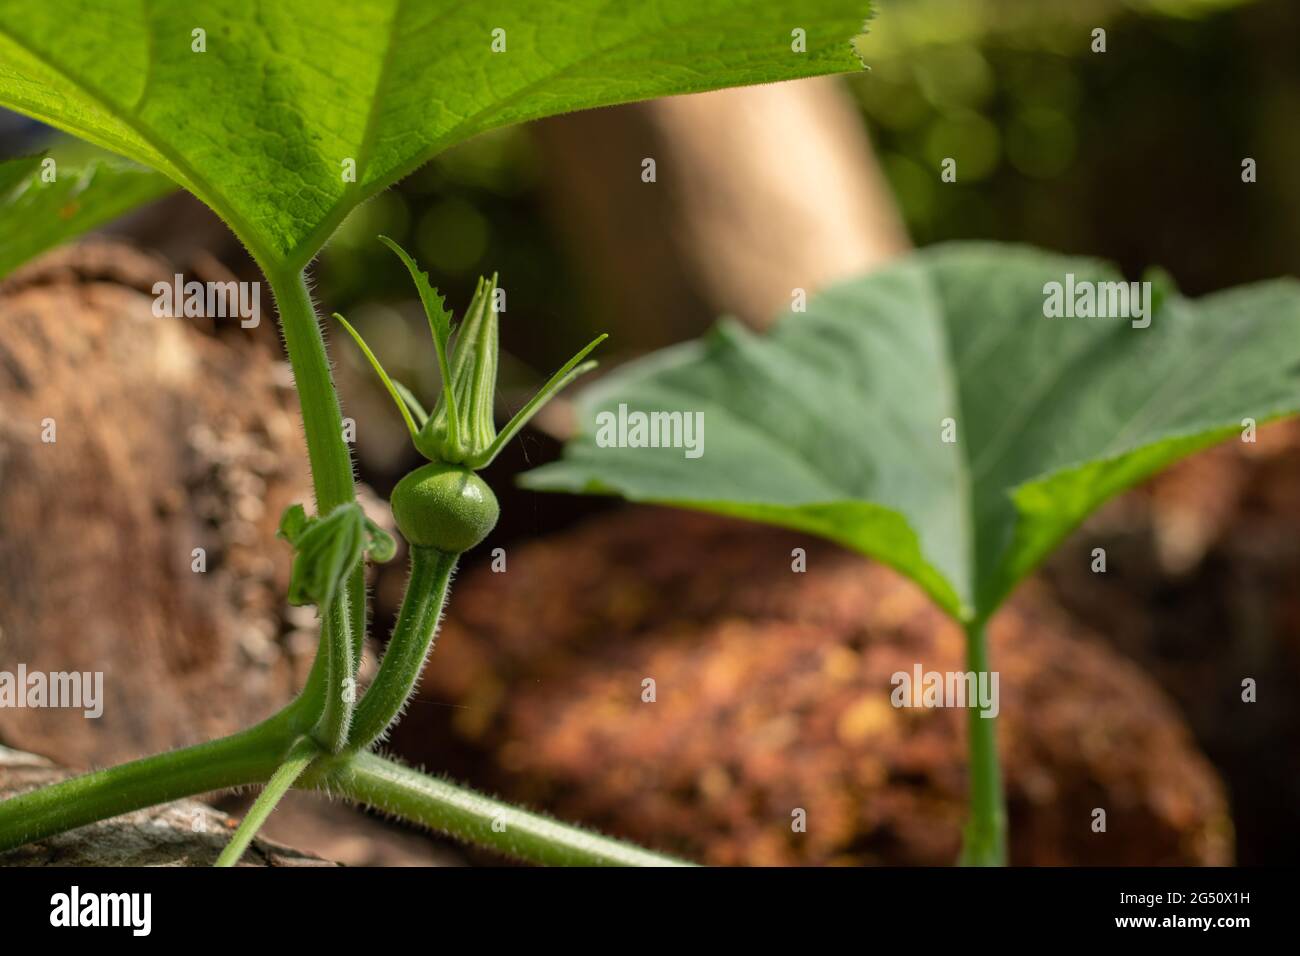 pumpkin flower bud on plant Stock Photo